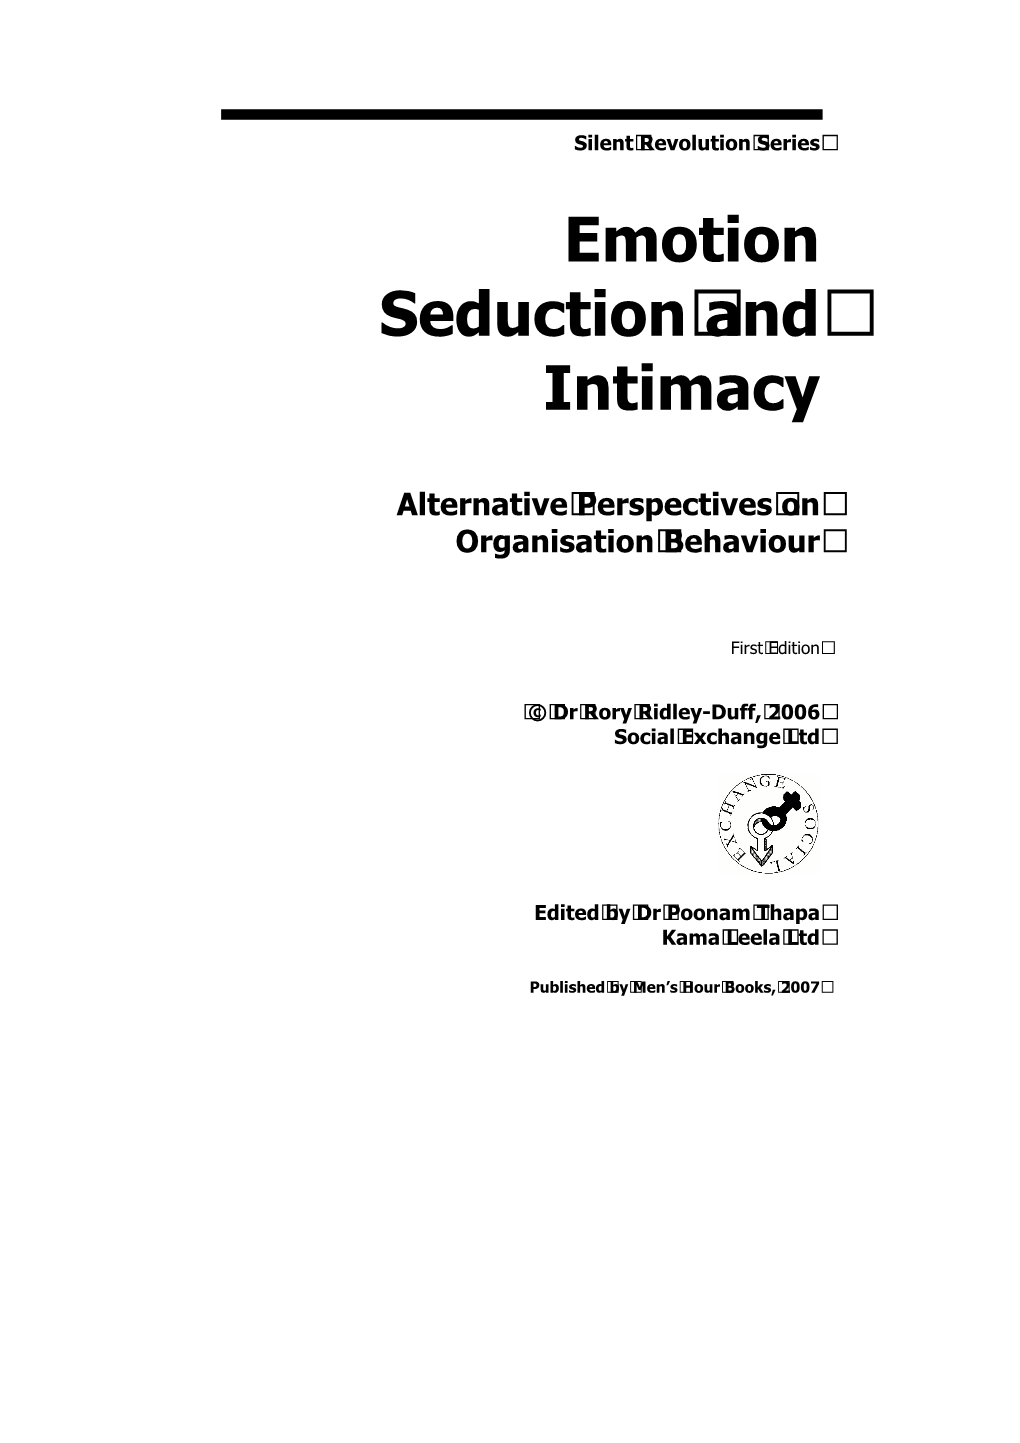 Emotion Seduction and Intimacy